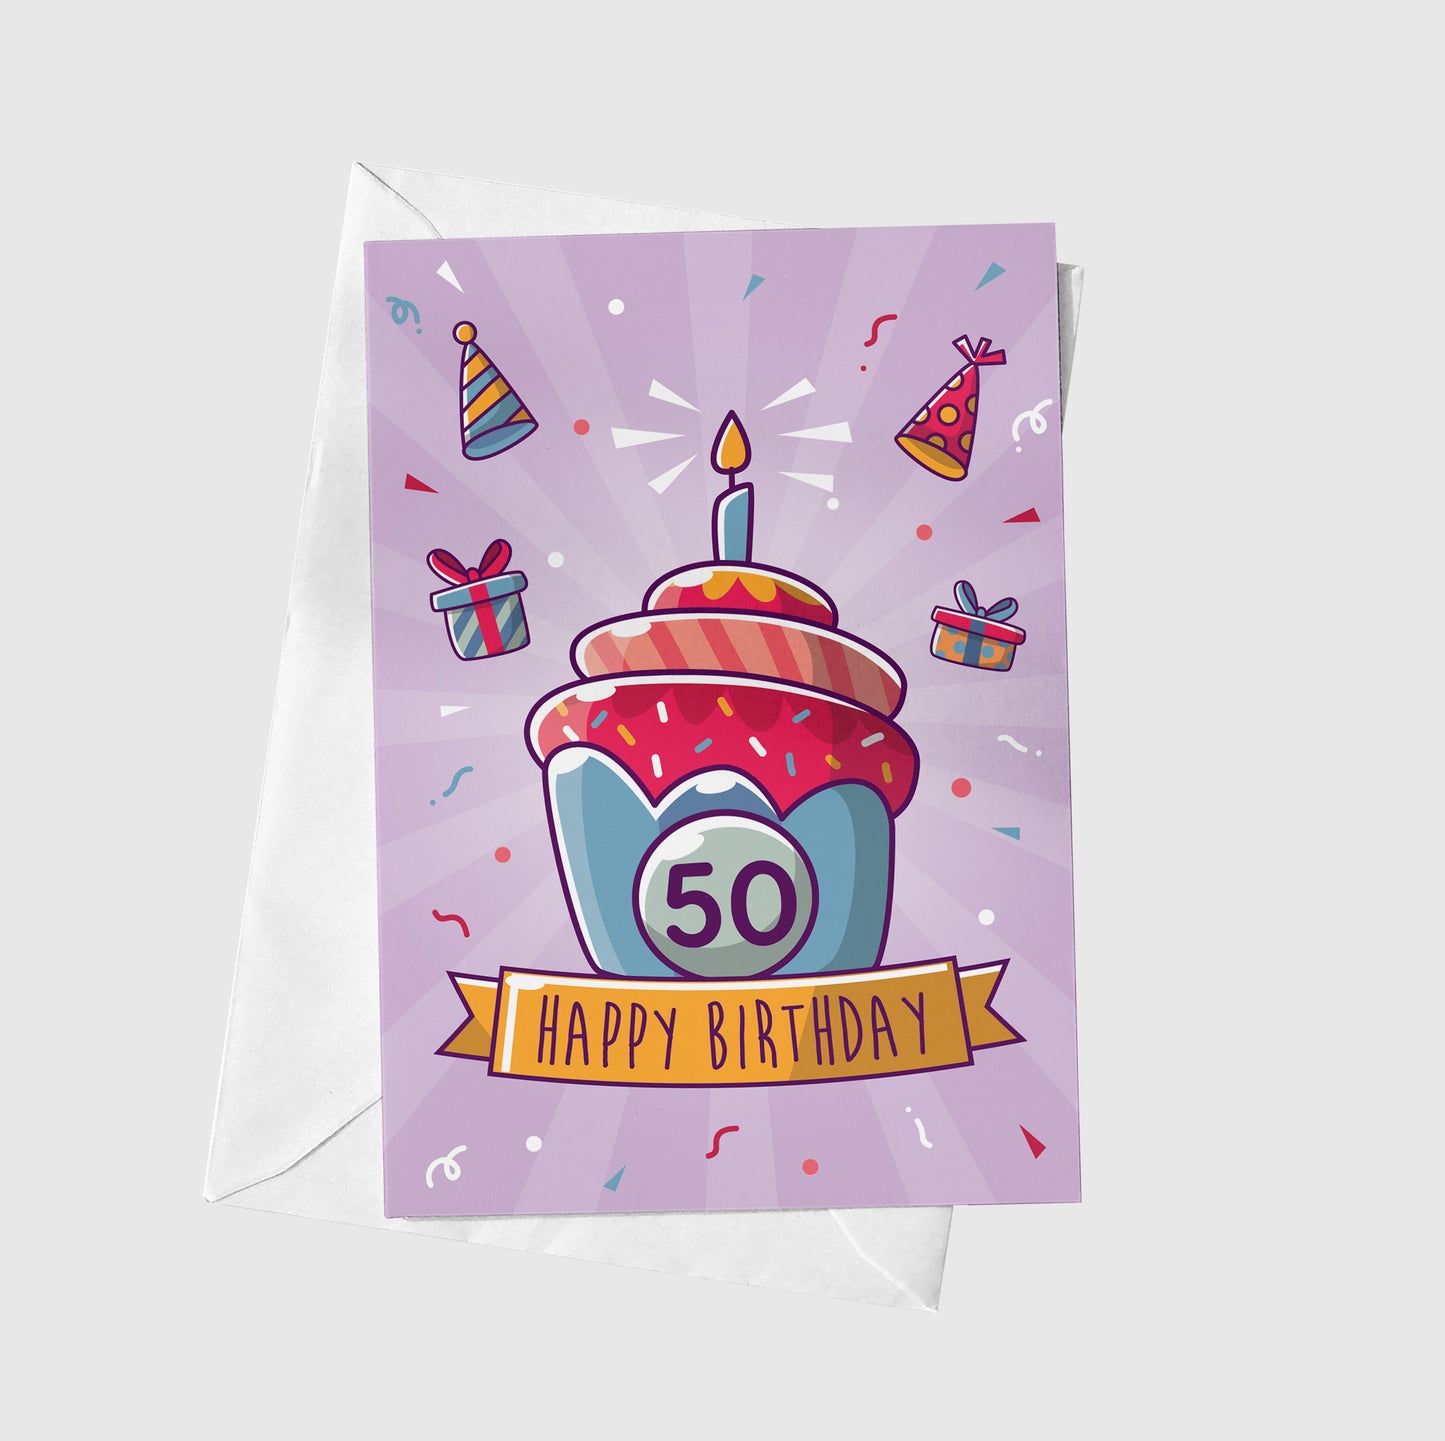 50 - Happy Birthday